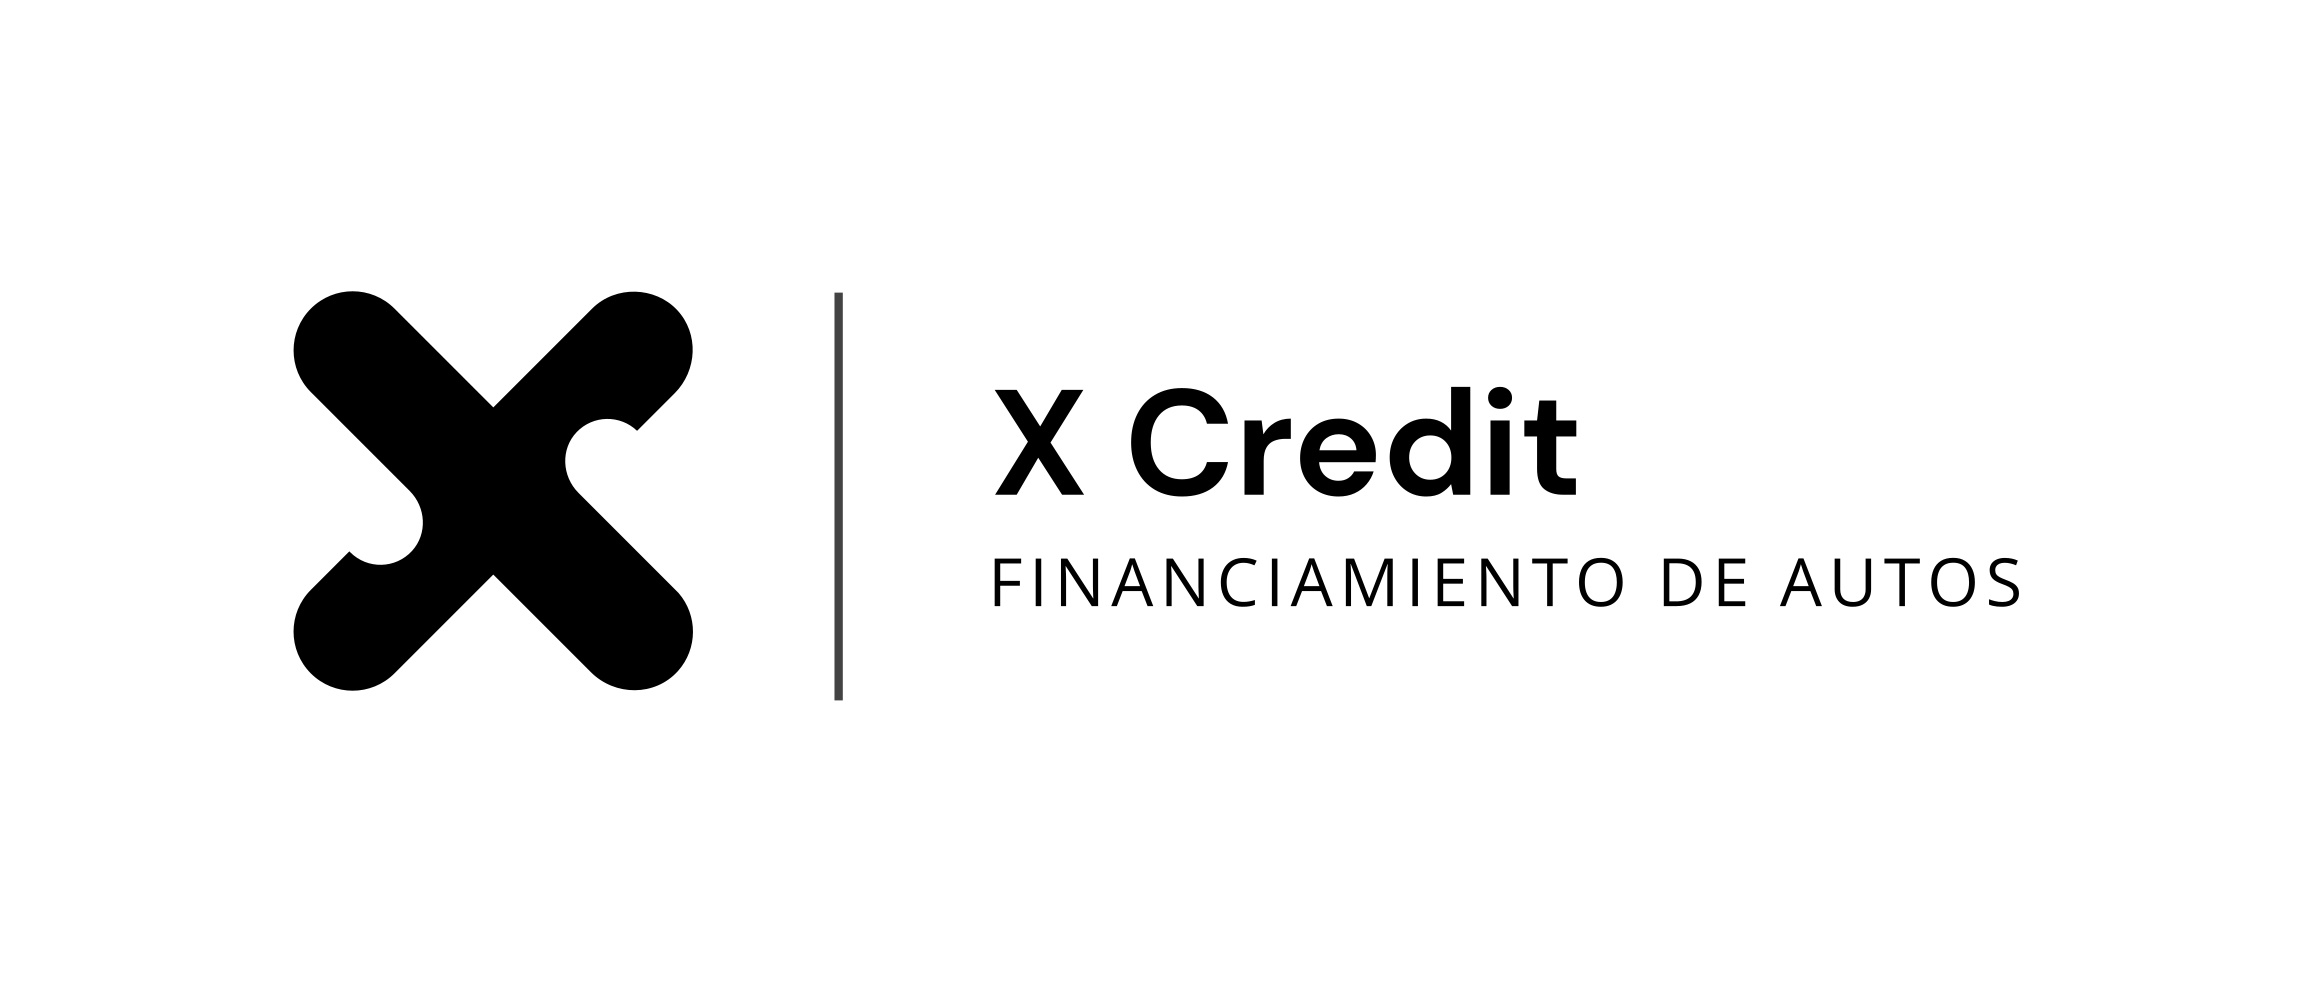 X Credit